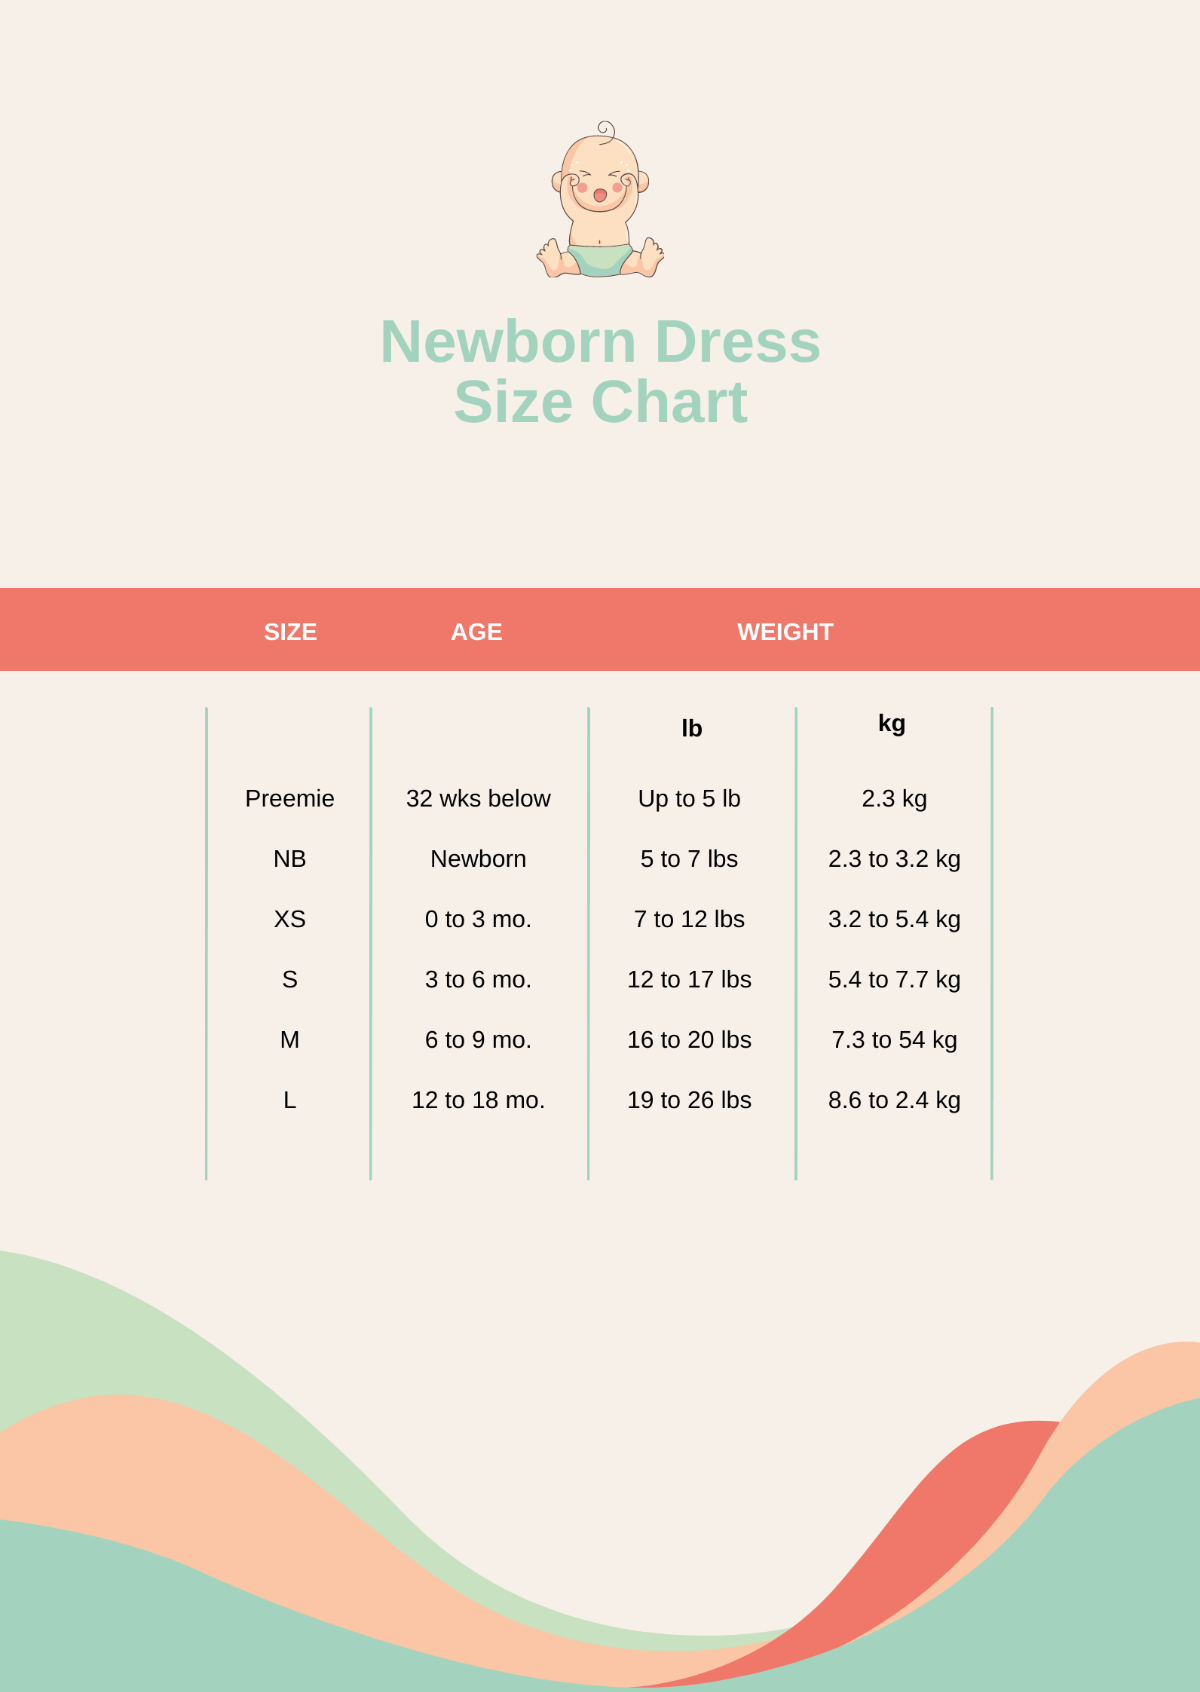 Newborn Dress Size Chart Template